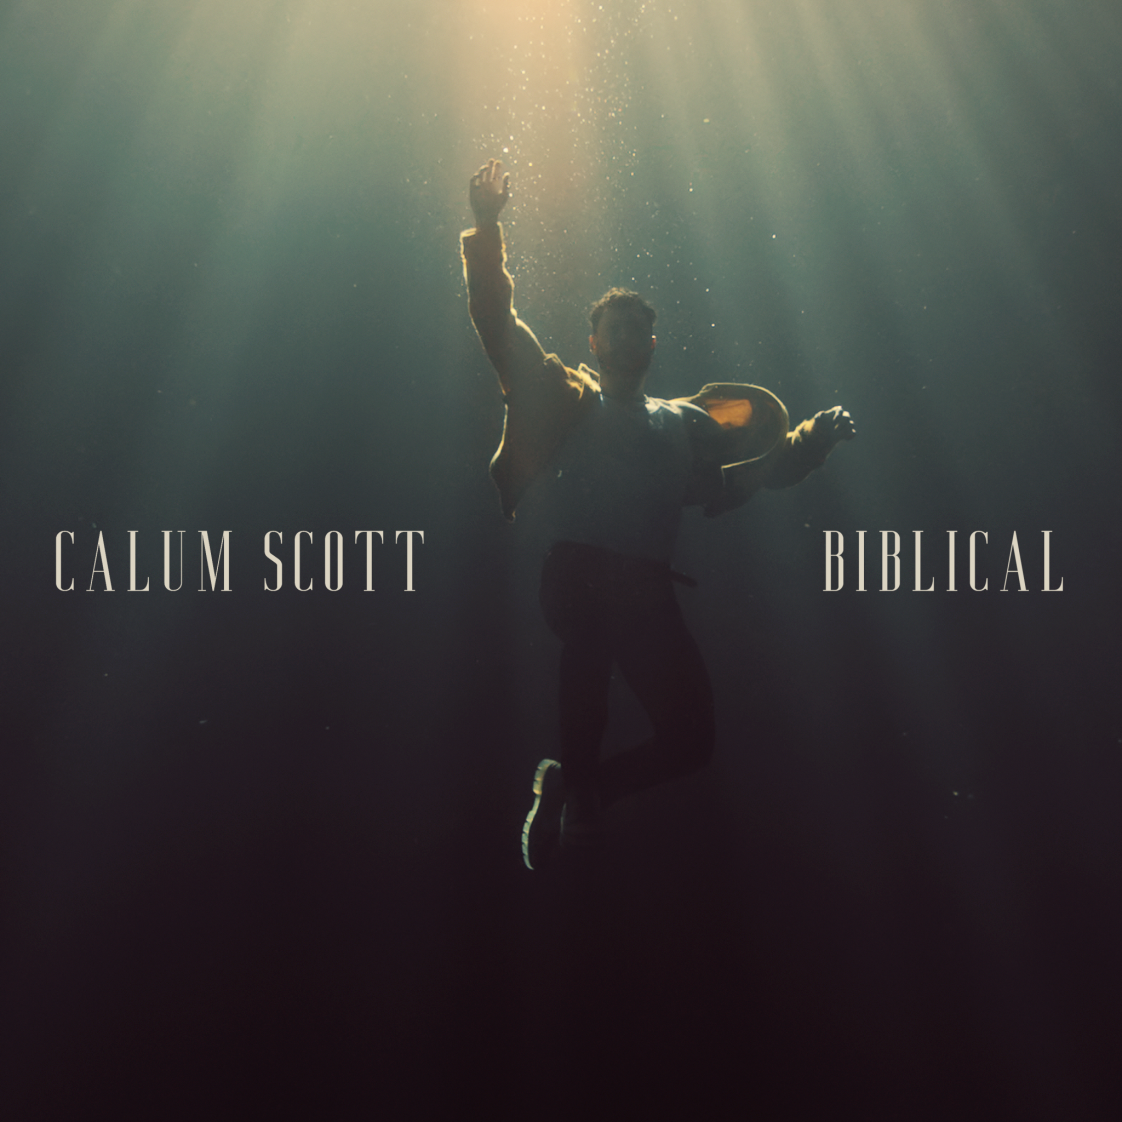 Calum Scott Drops Soulful New Single 'Biblical' - Listen